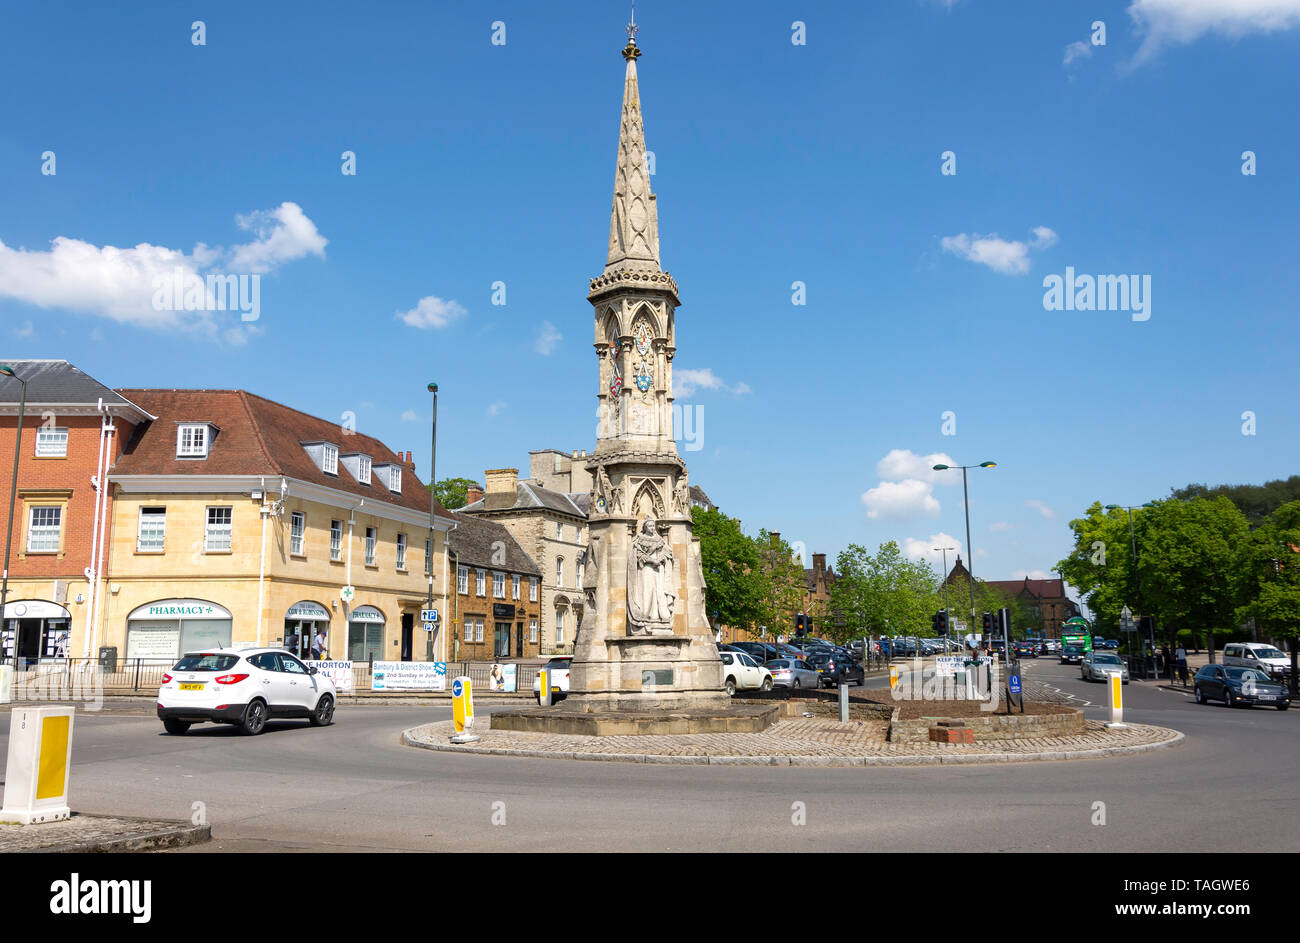 Banbury Cross, Horse Fair, Banbury, Oxfordshire, England, United Kingdom Stock Photo